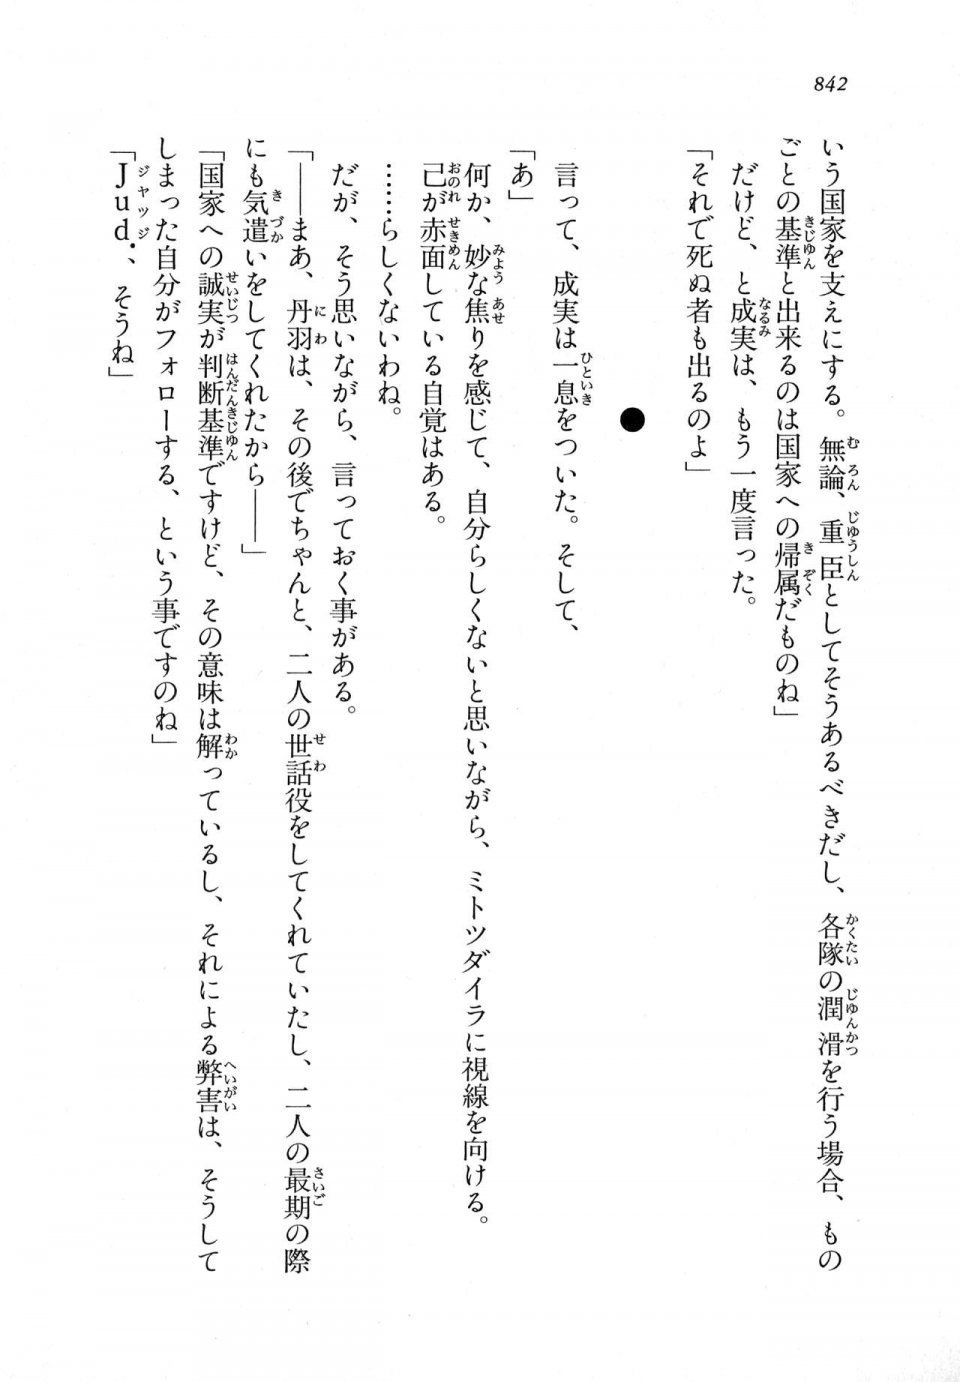 Kyoukai Senjou no Horizon LN Vol 18(7C) Part 2 - Photo #282